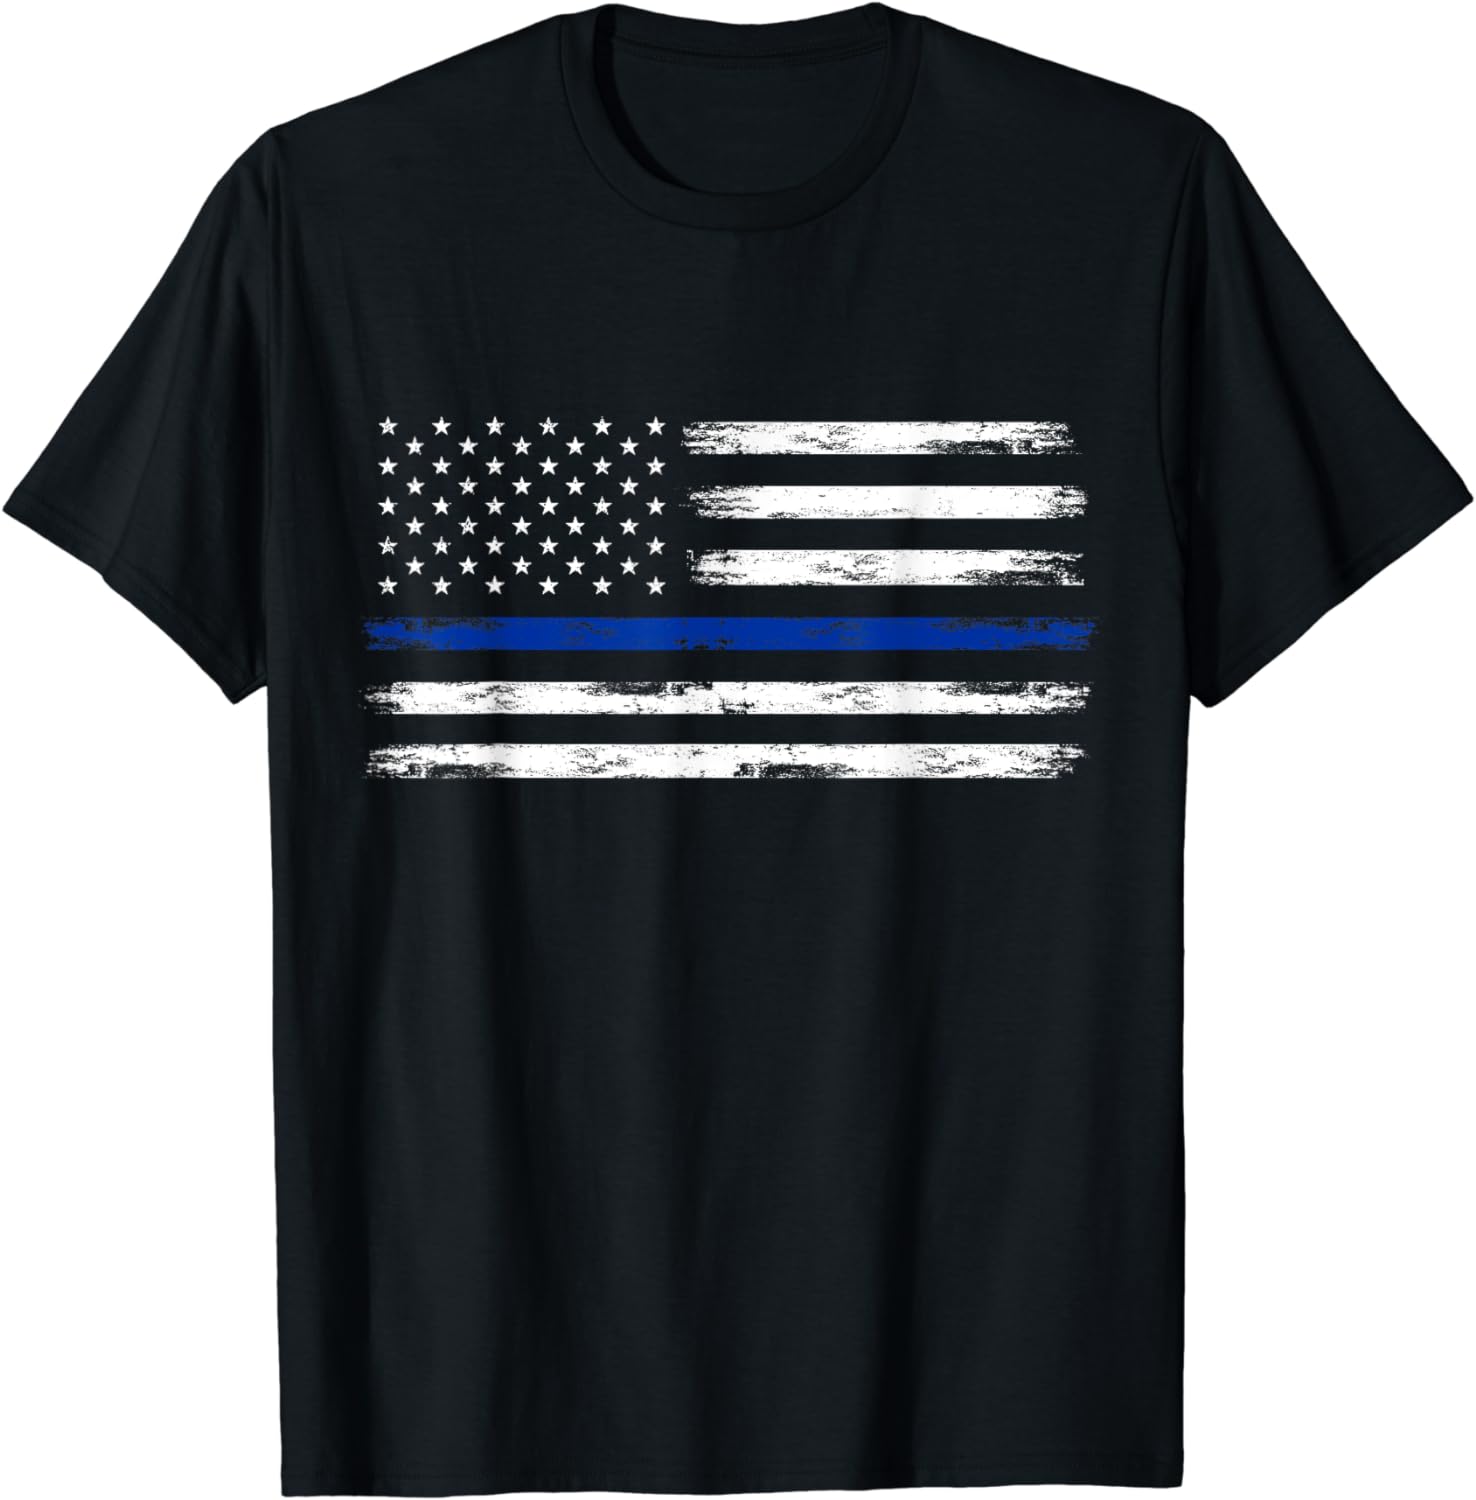 Police Officer US USA American Flag Thin Blue Line T-Shirt - Walmart.com